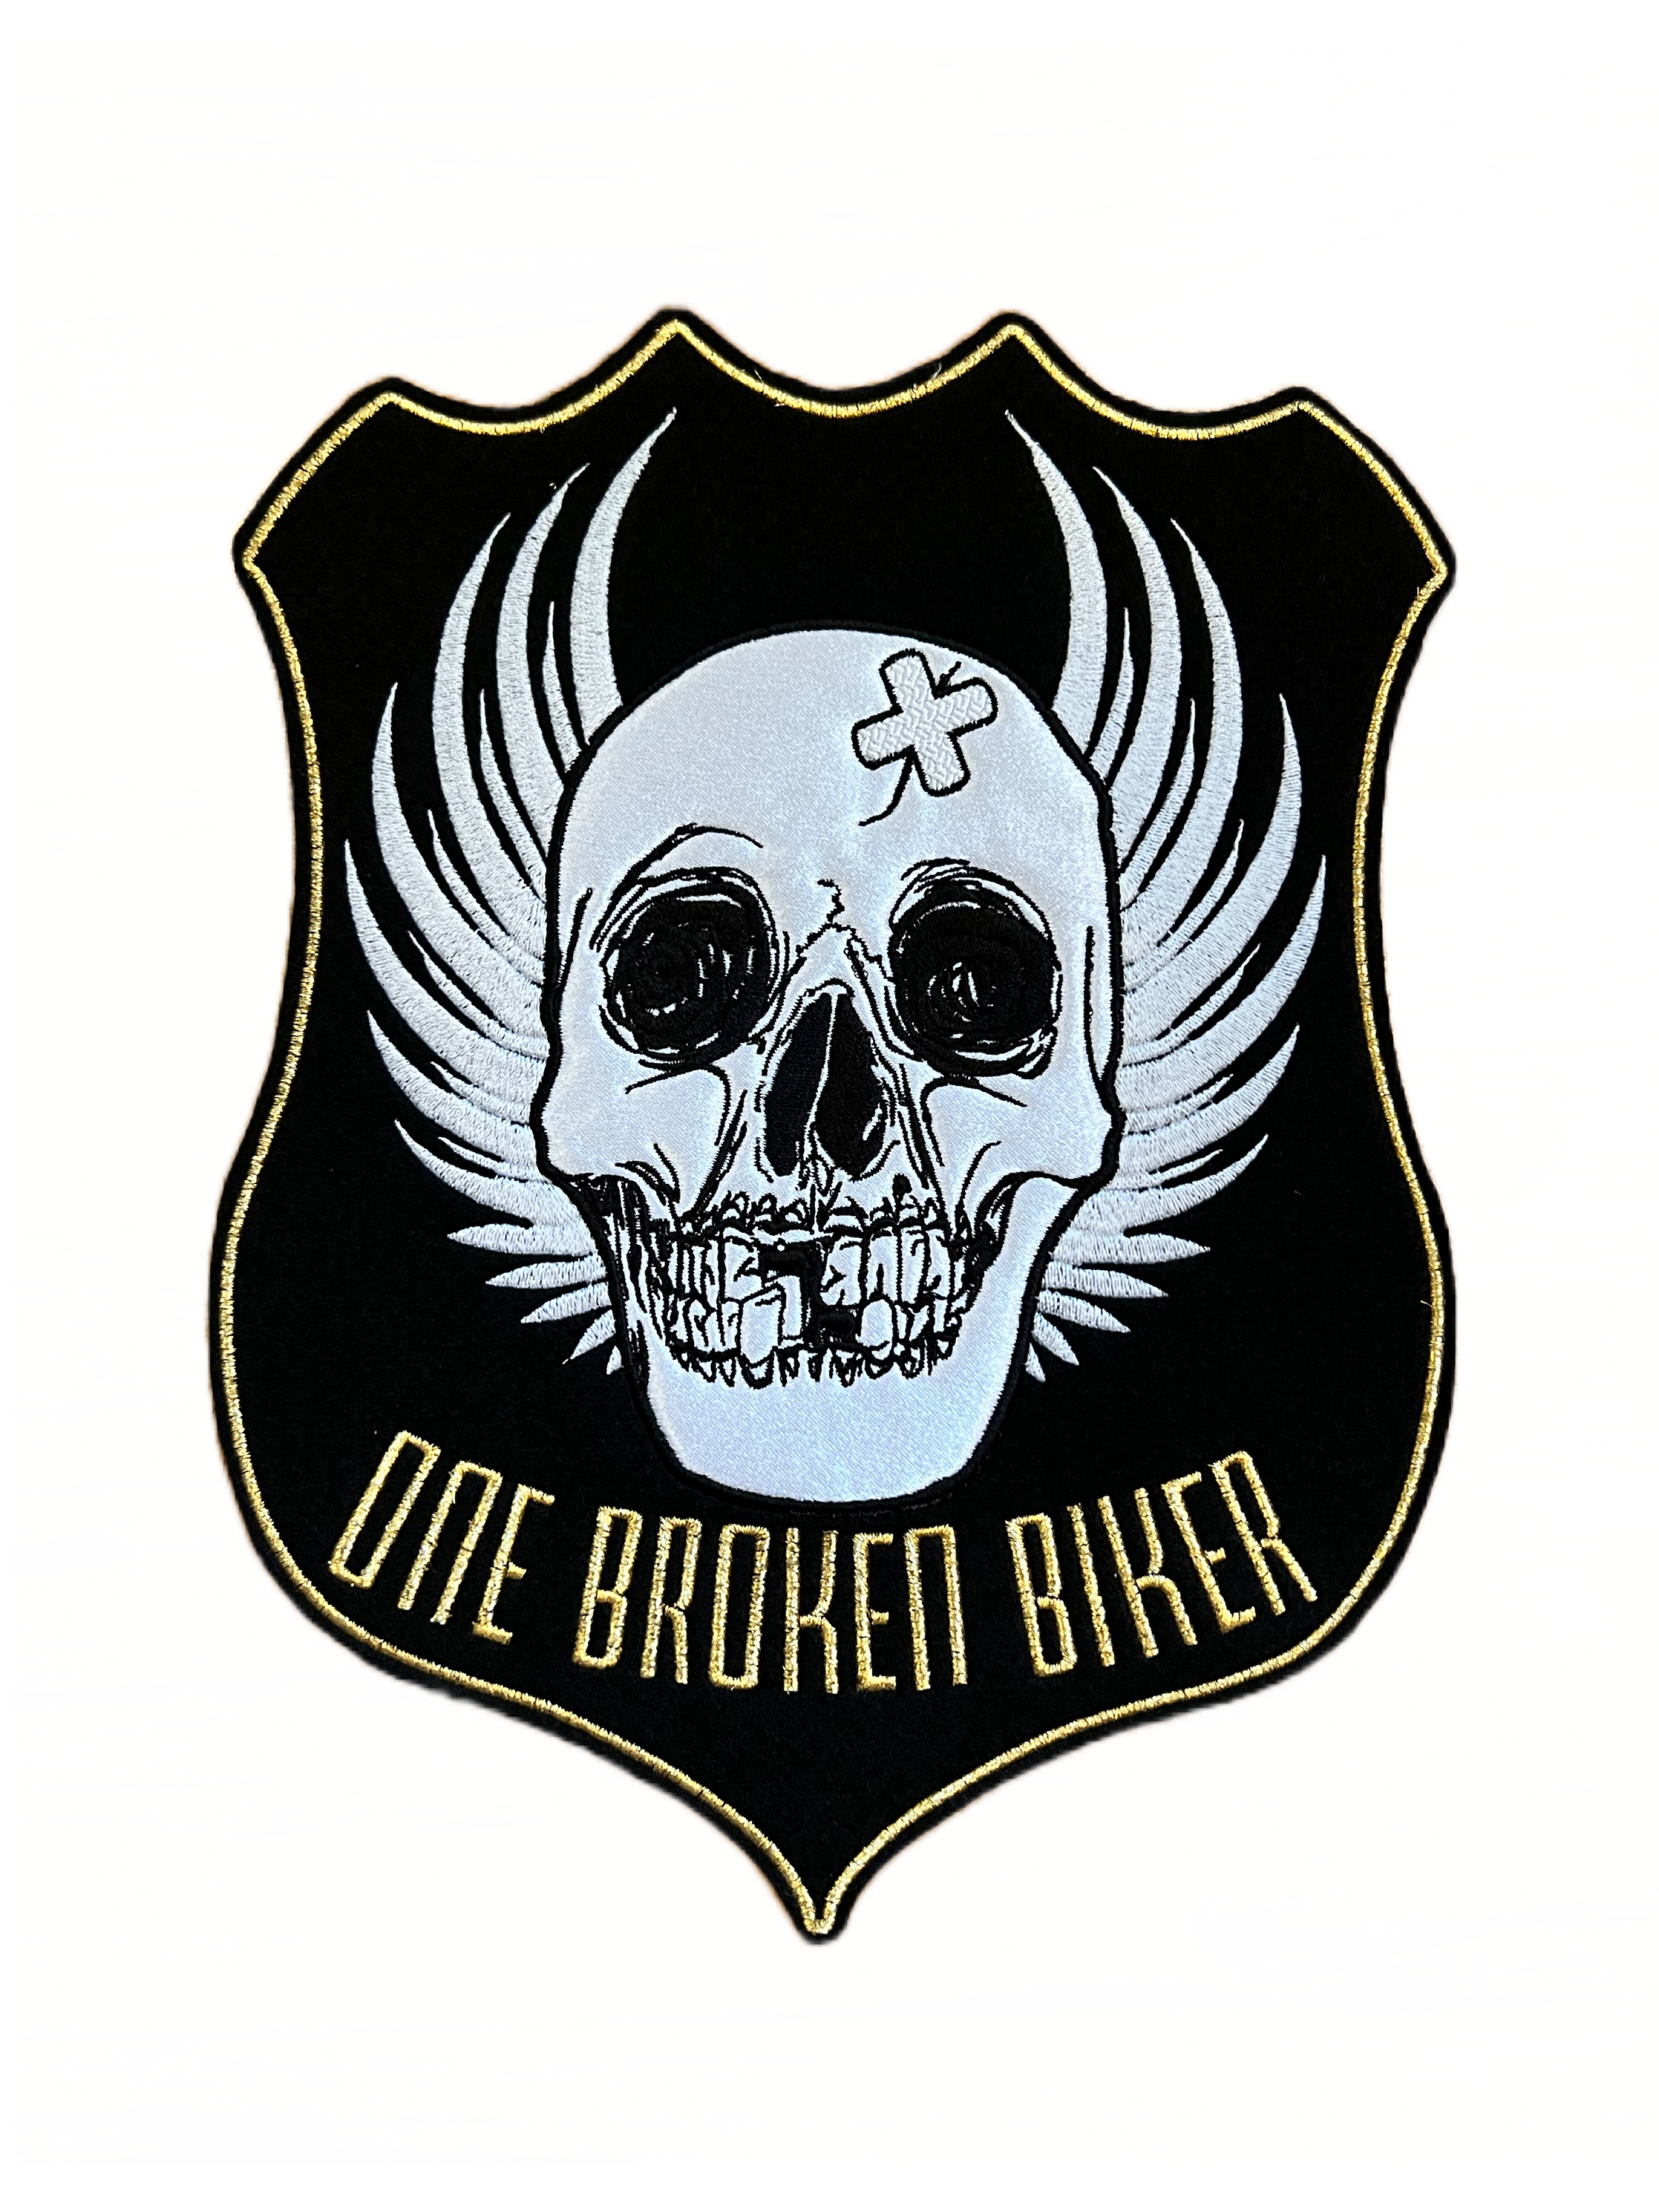 Large One Broken Biker Back Patches – One Broken Biker Clothing